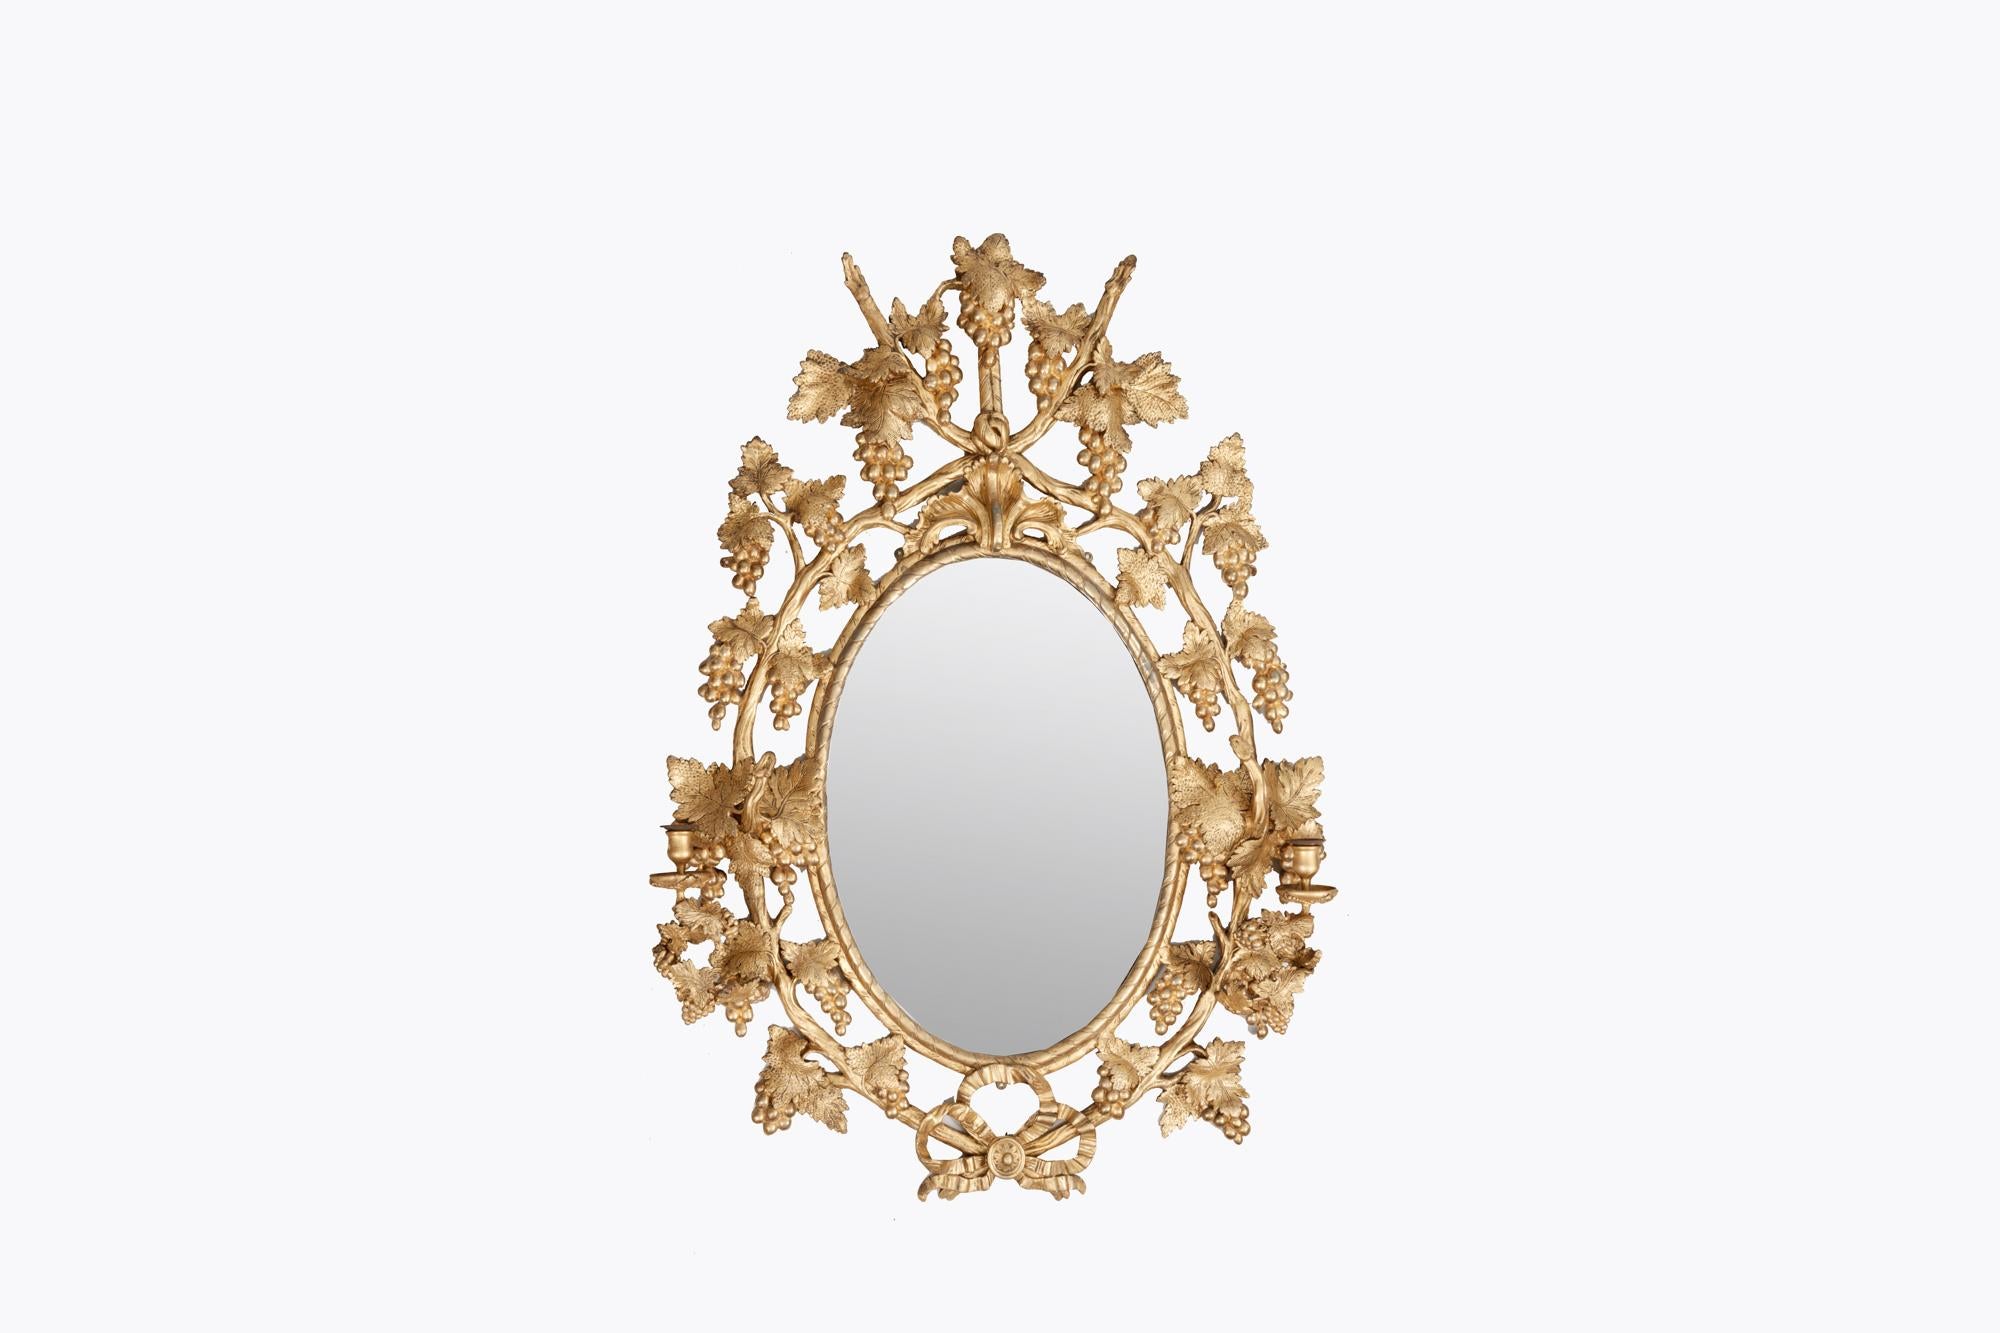 Regency Mid 18th Century Ornate Gilt Oval Girandole Mirror attributed to John Booker For Sale